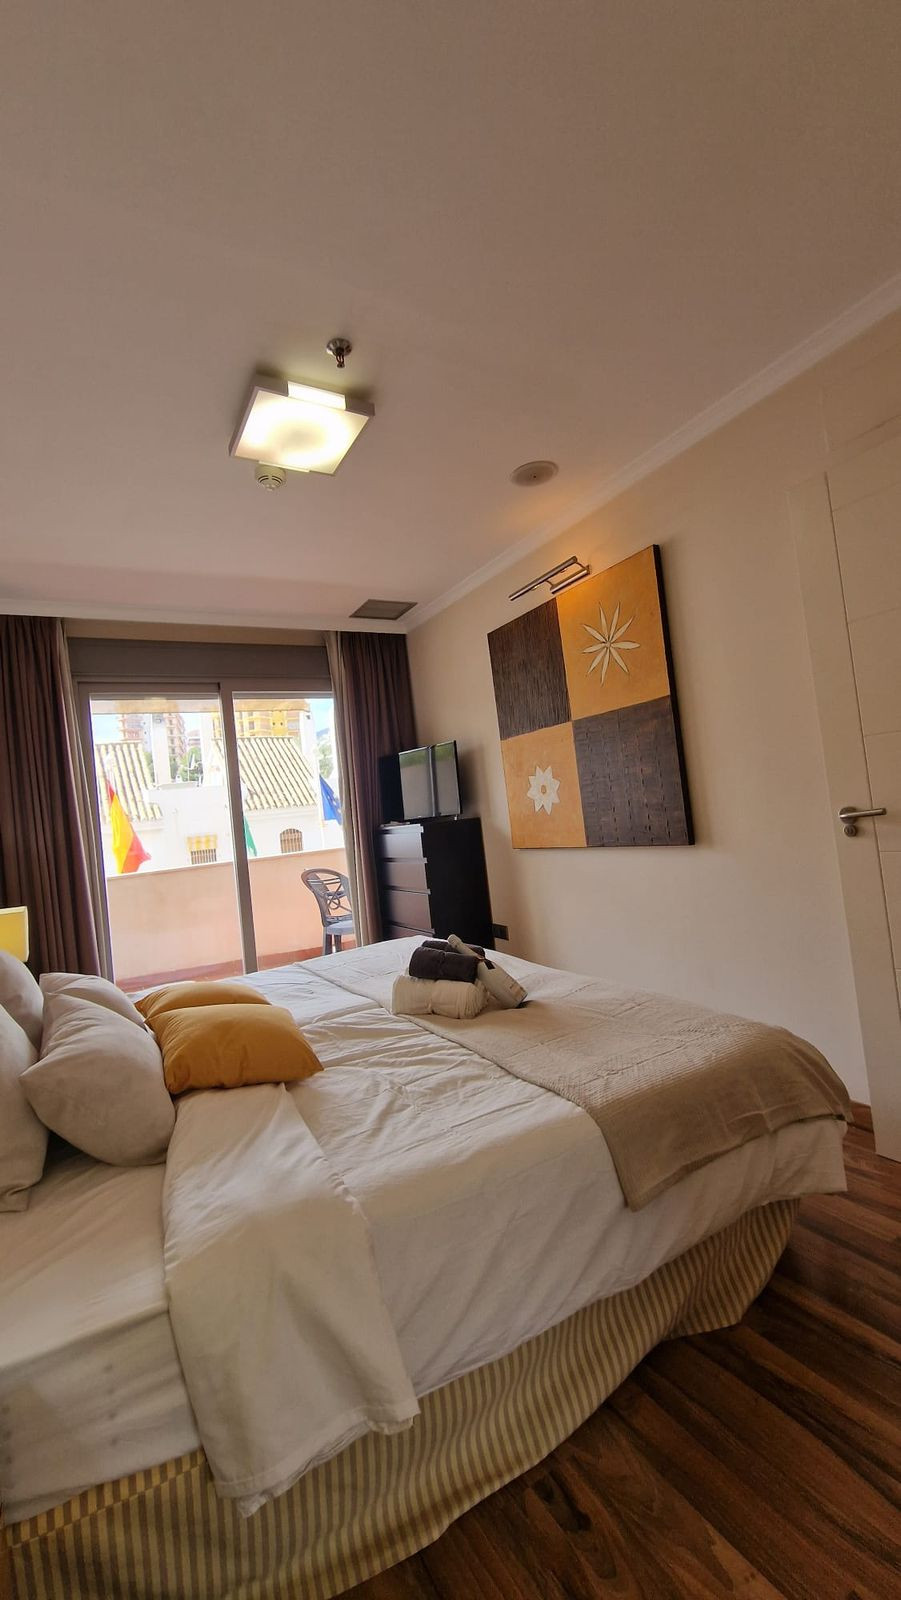 Apartamento con 1 Dormitorios en Venta Benalmadena